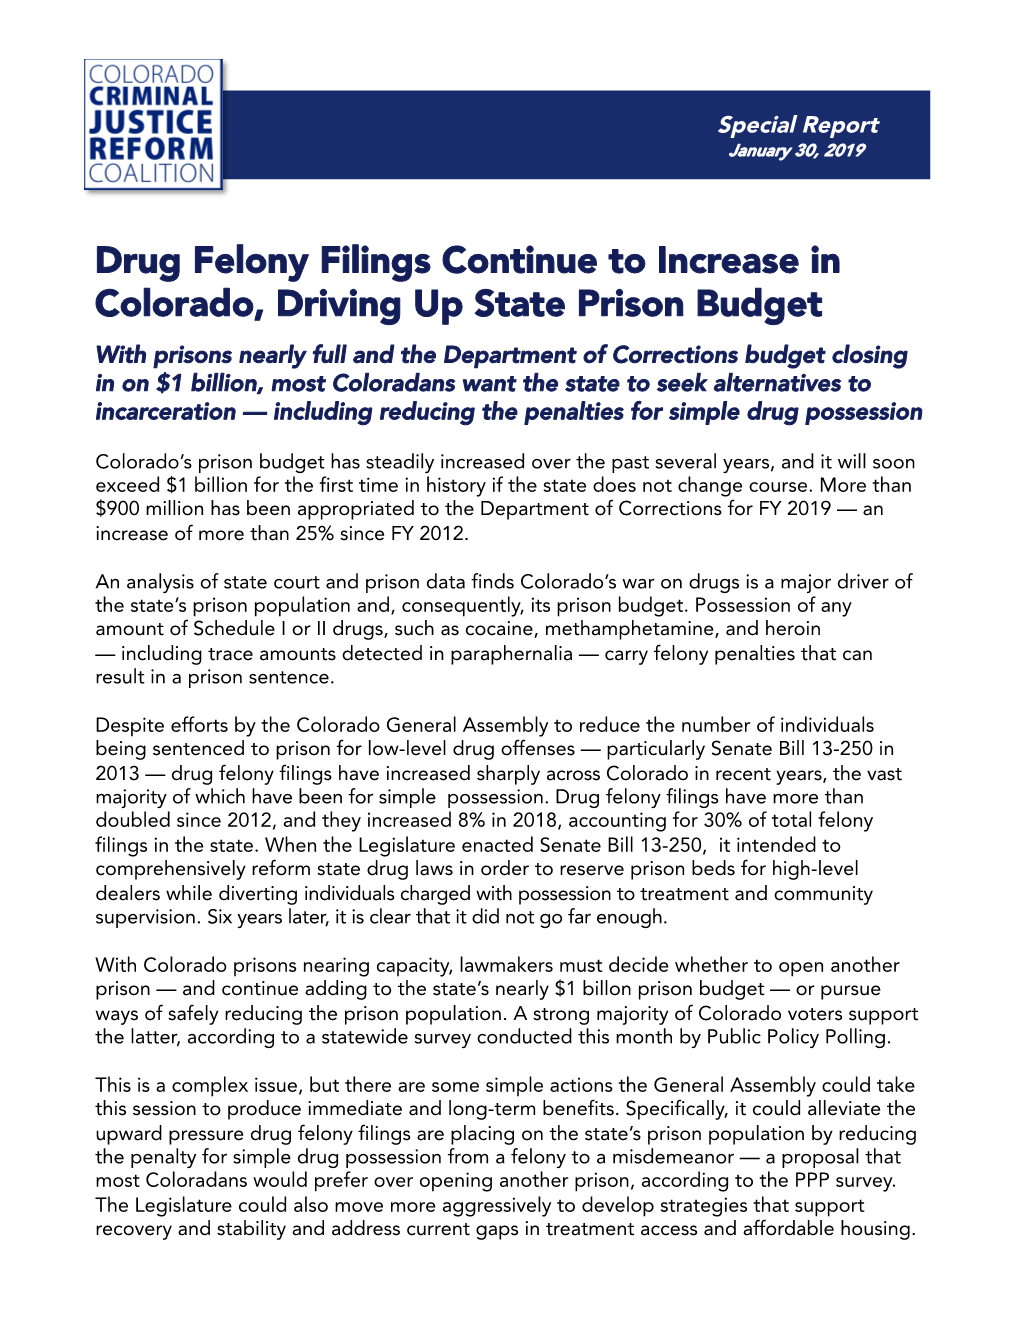 CCJRC Prison Budget Drug Felony Report